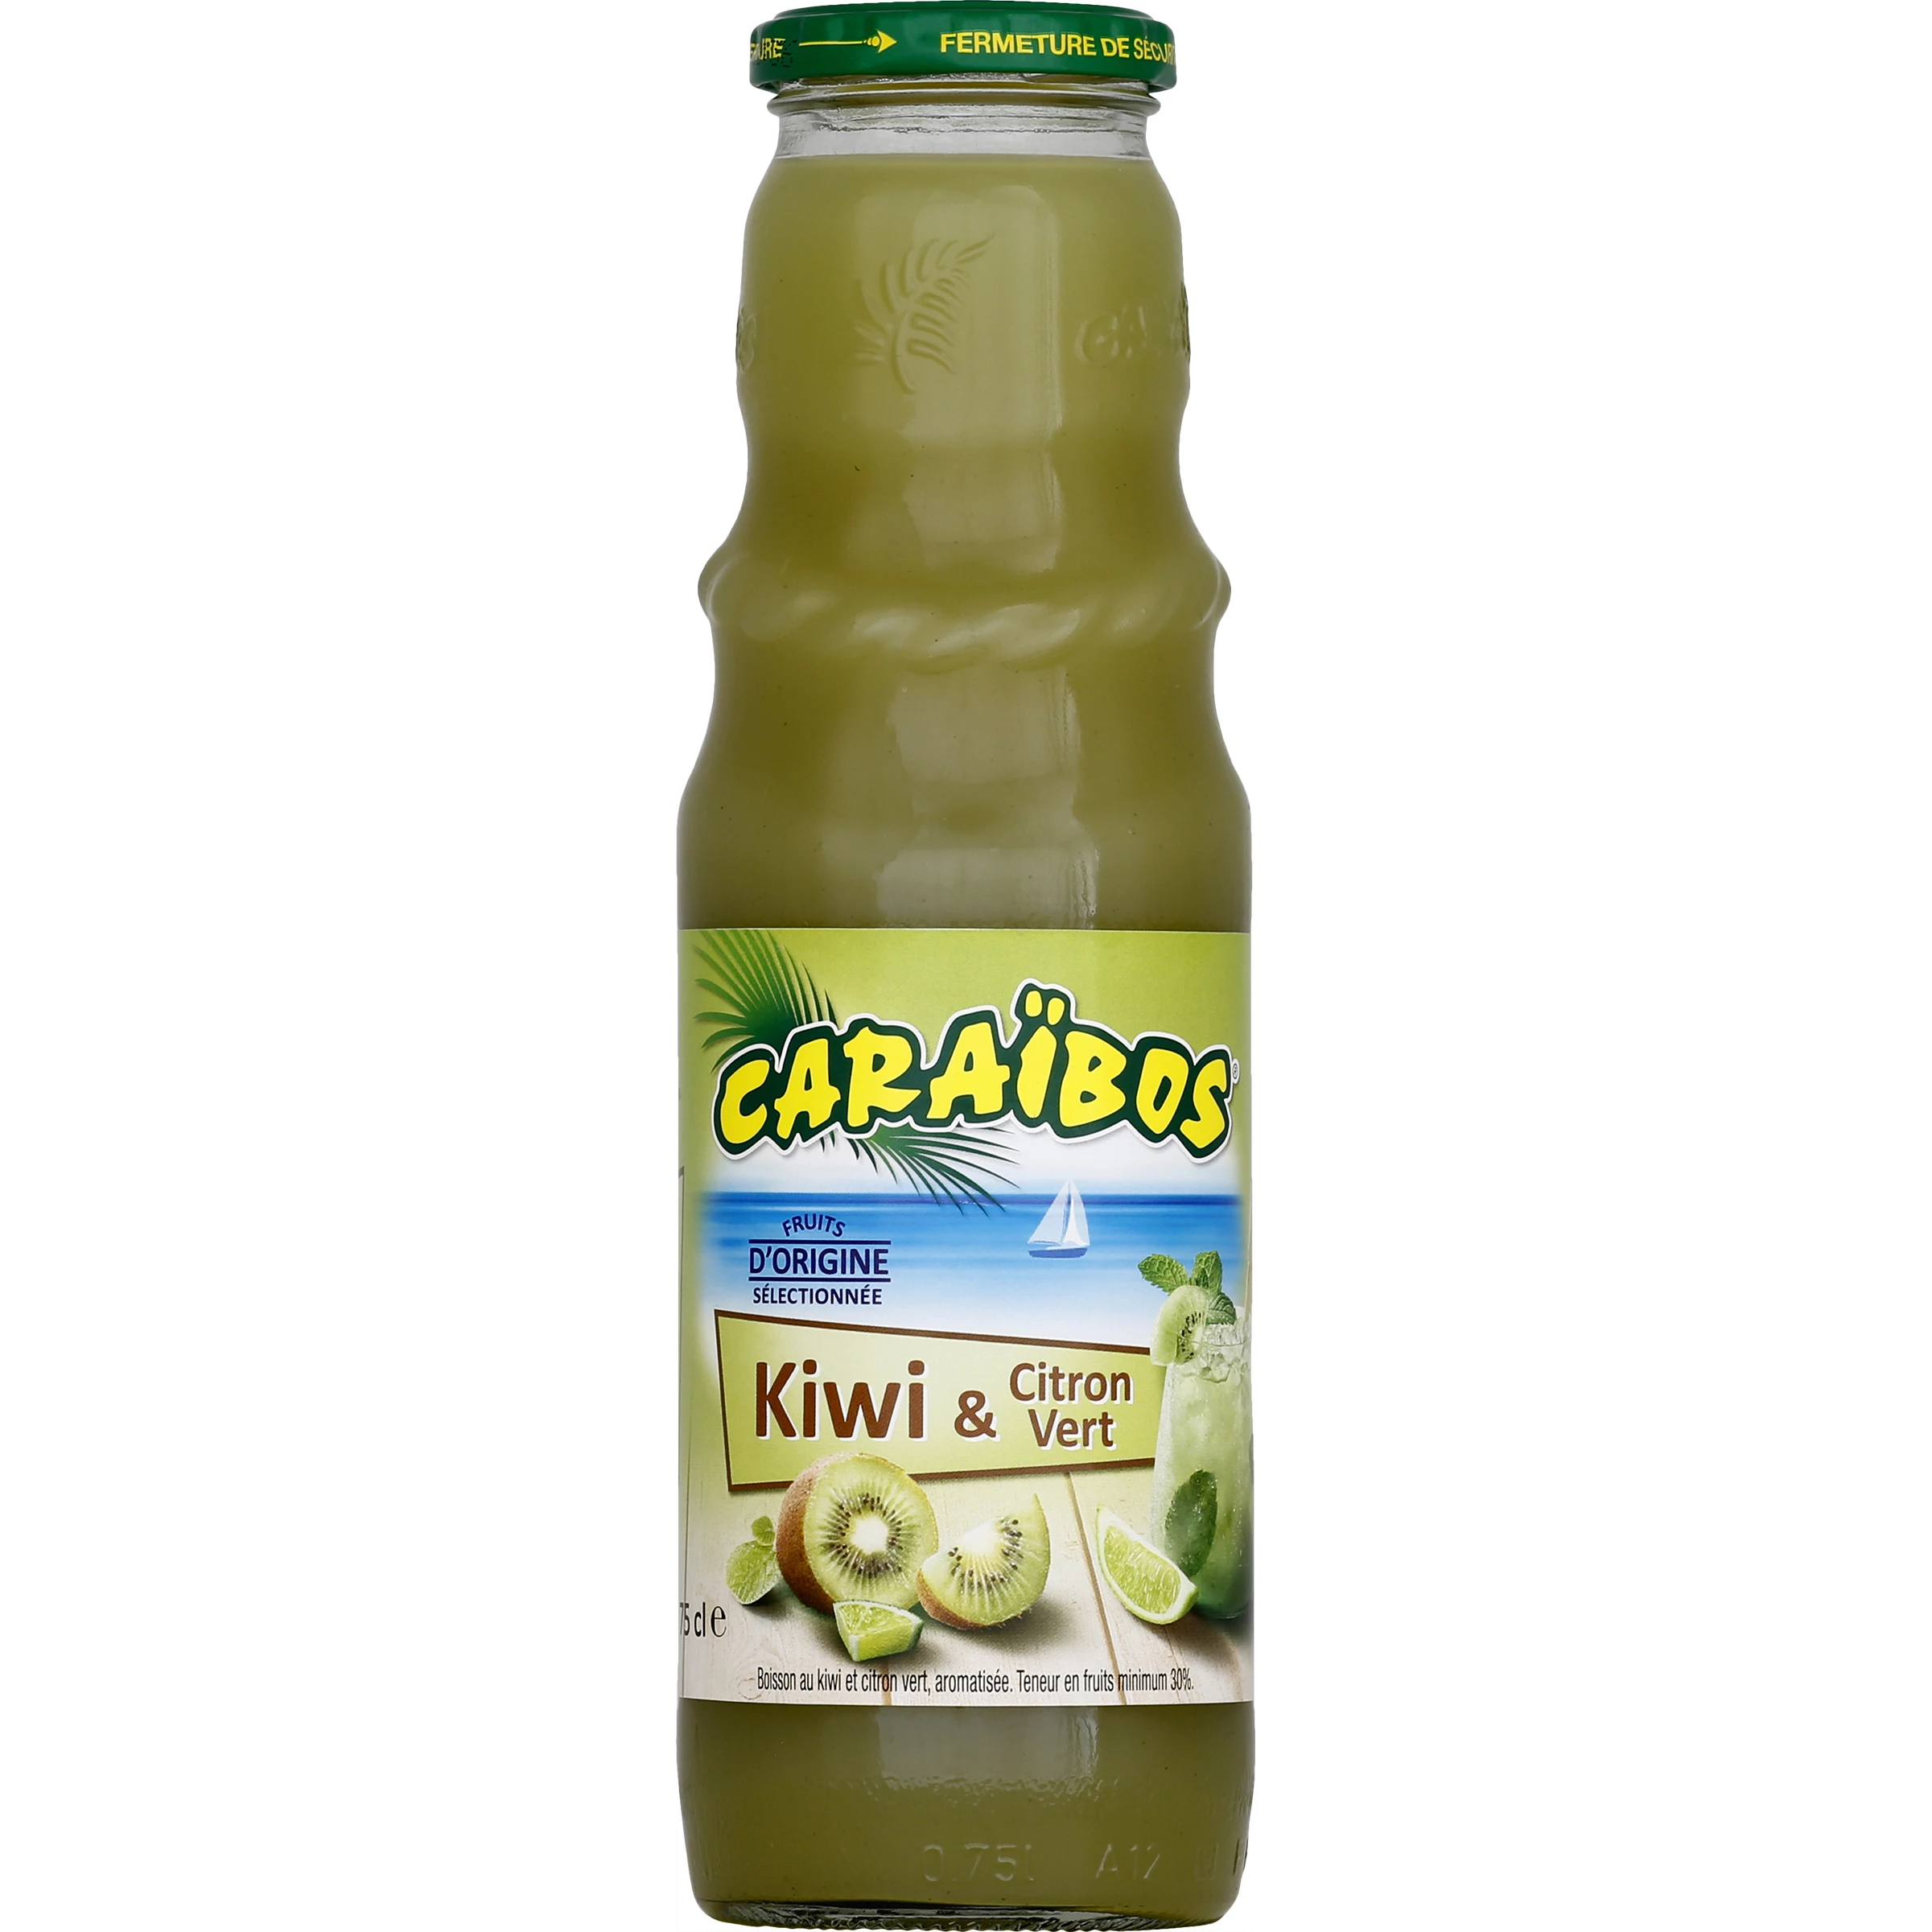 Caraibos Kiwi Citron Vert 75 C